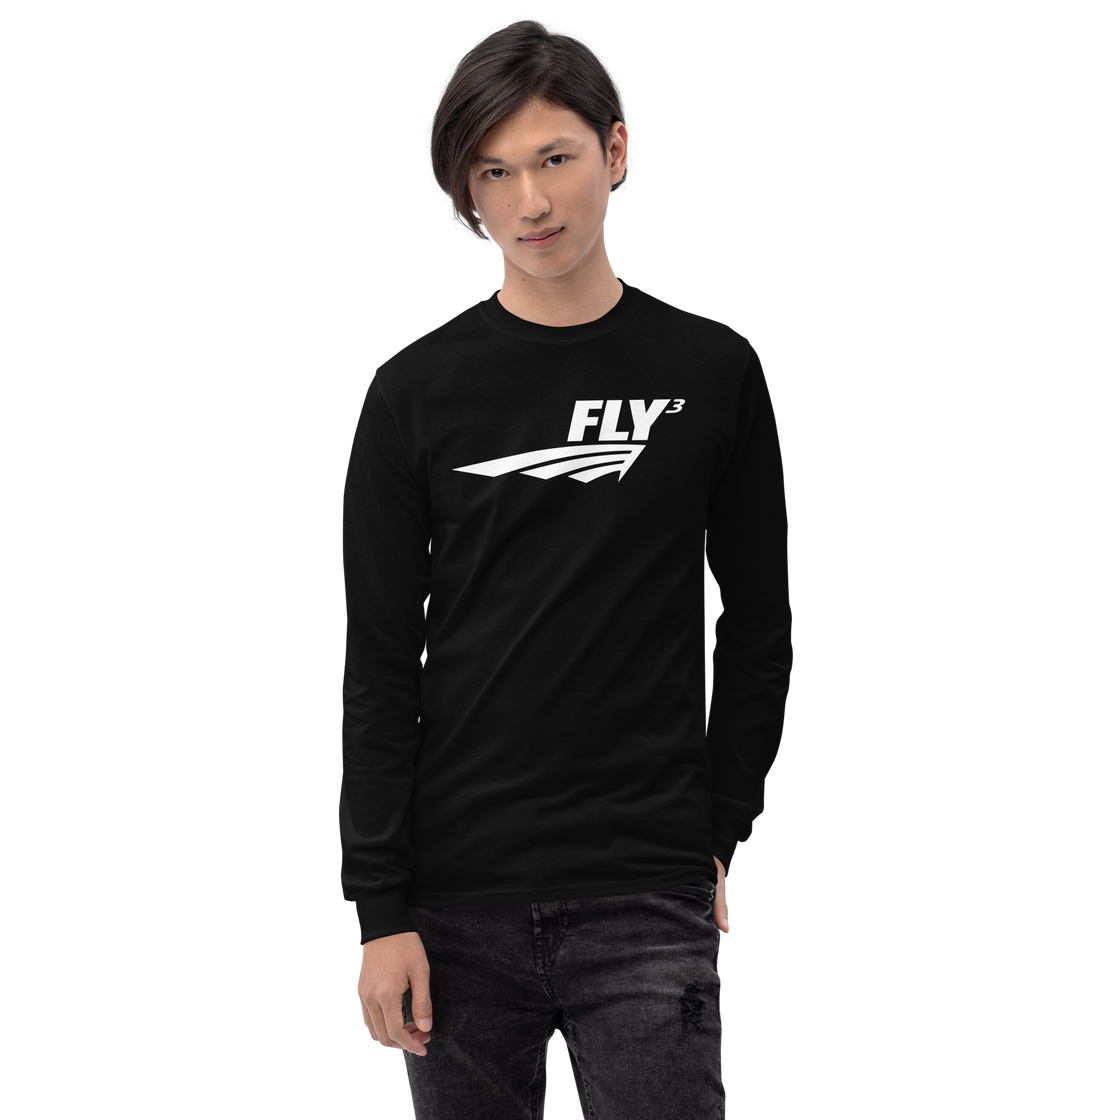 FLY³ Men’s Long Sleeve Shirt | Flycube